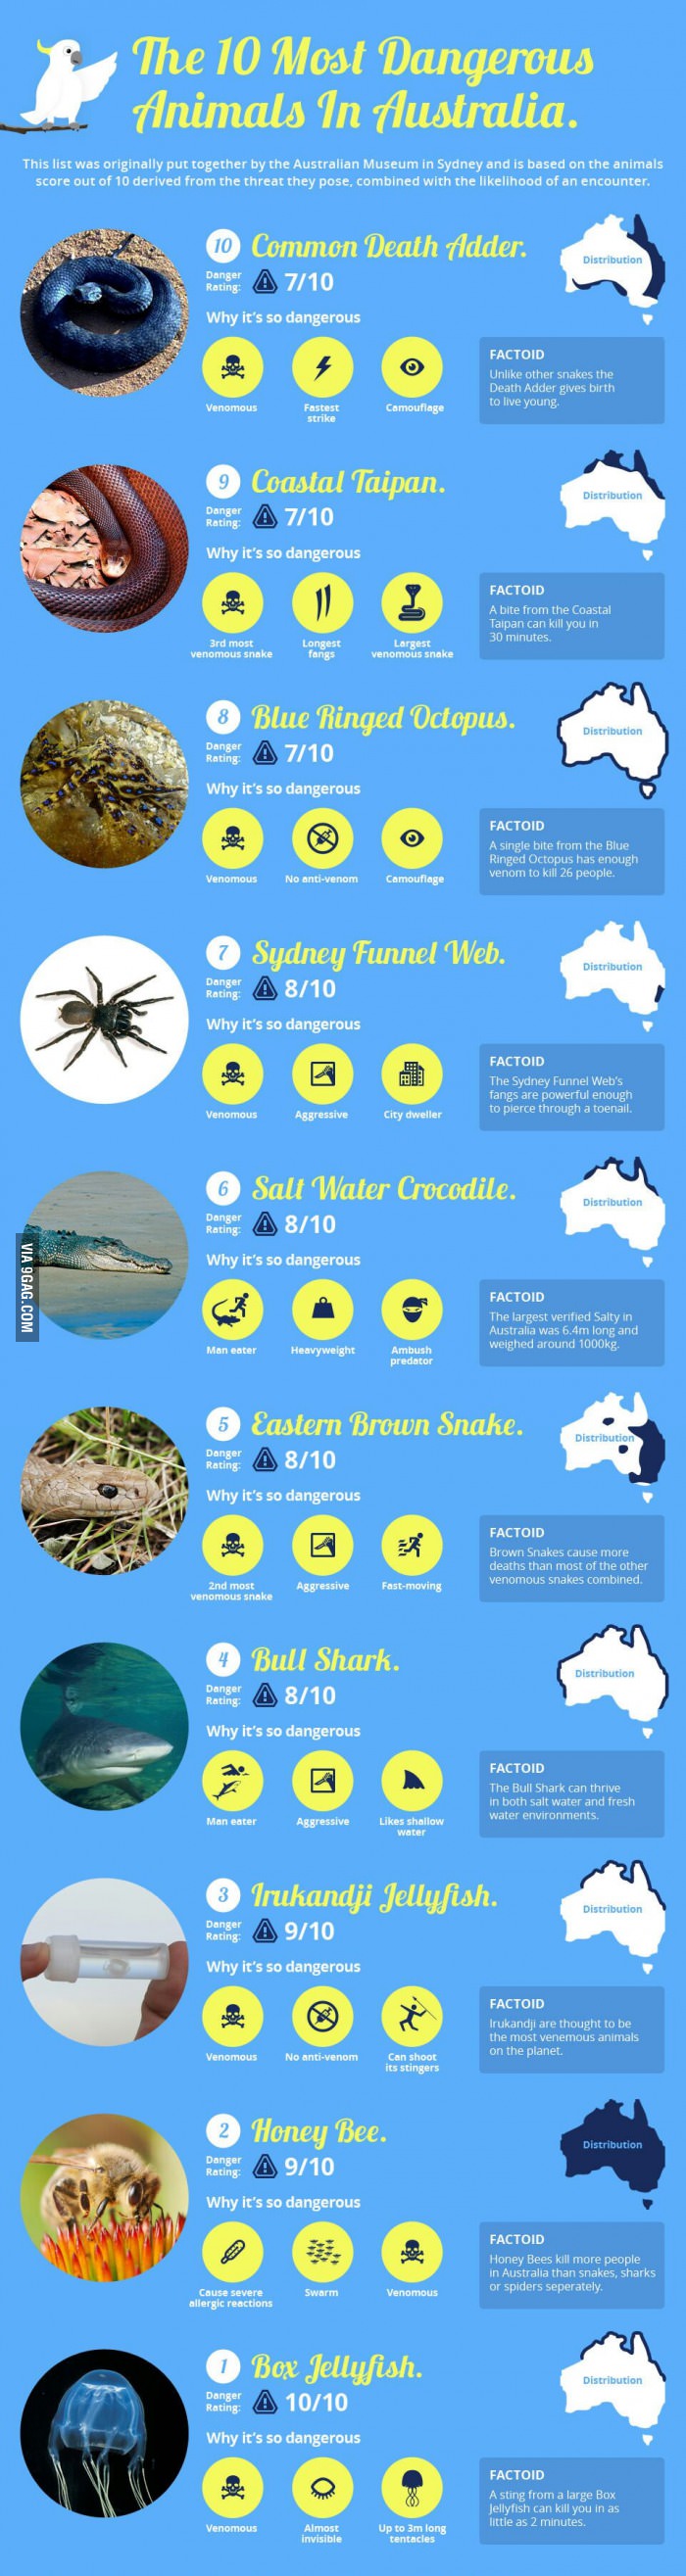 10 most dangerous animals in australia, chart, information, dyk